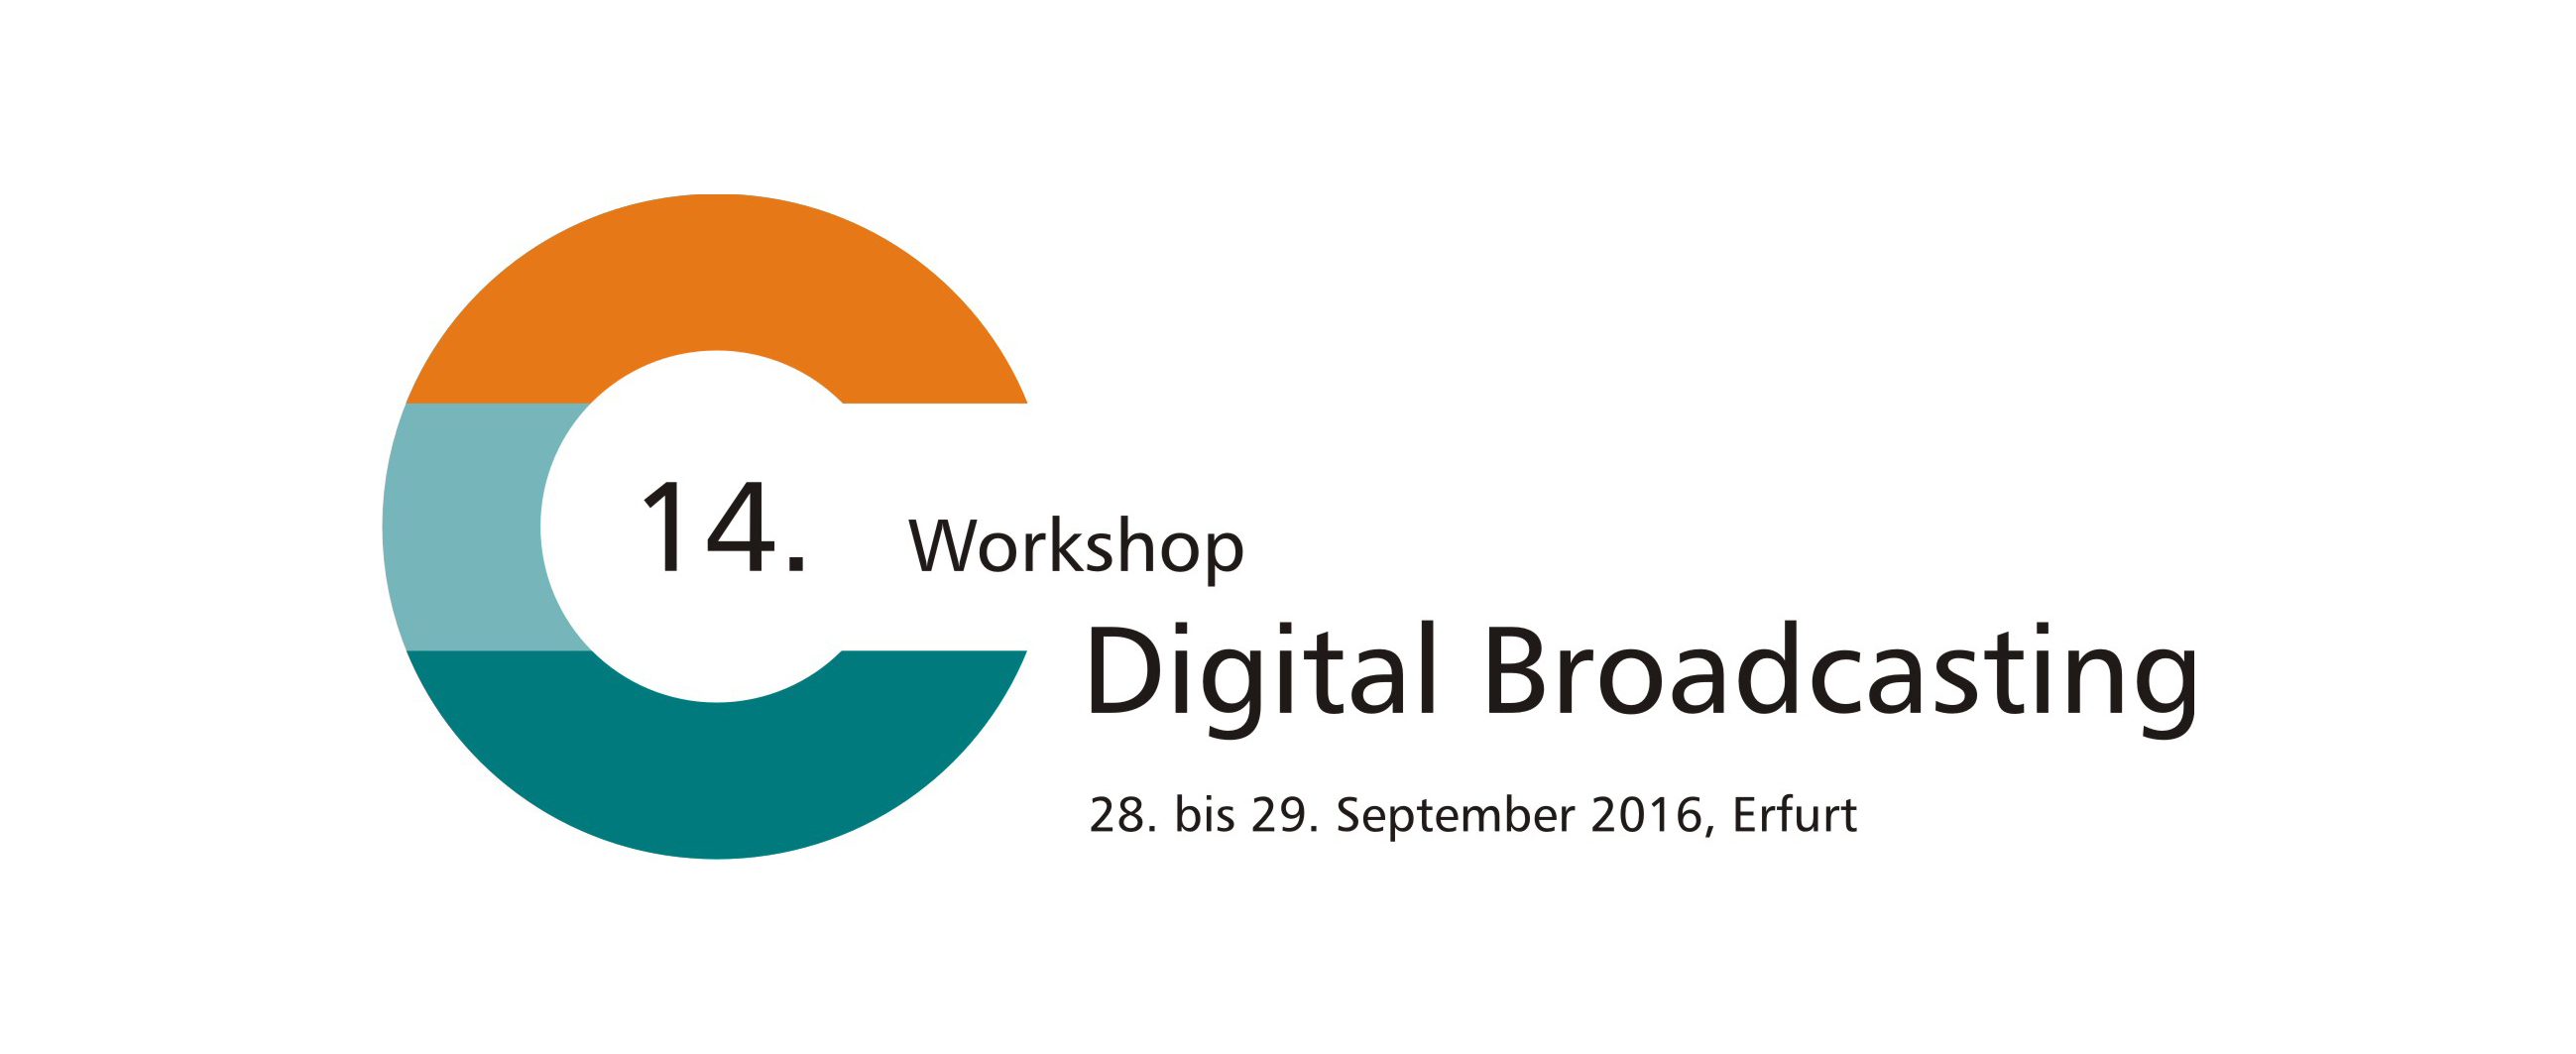 Workshop Digital Broadcasting WSDB 2016